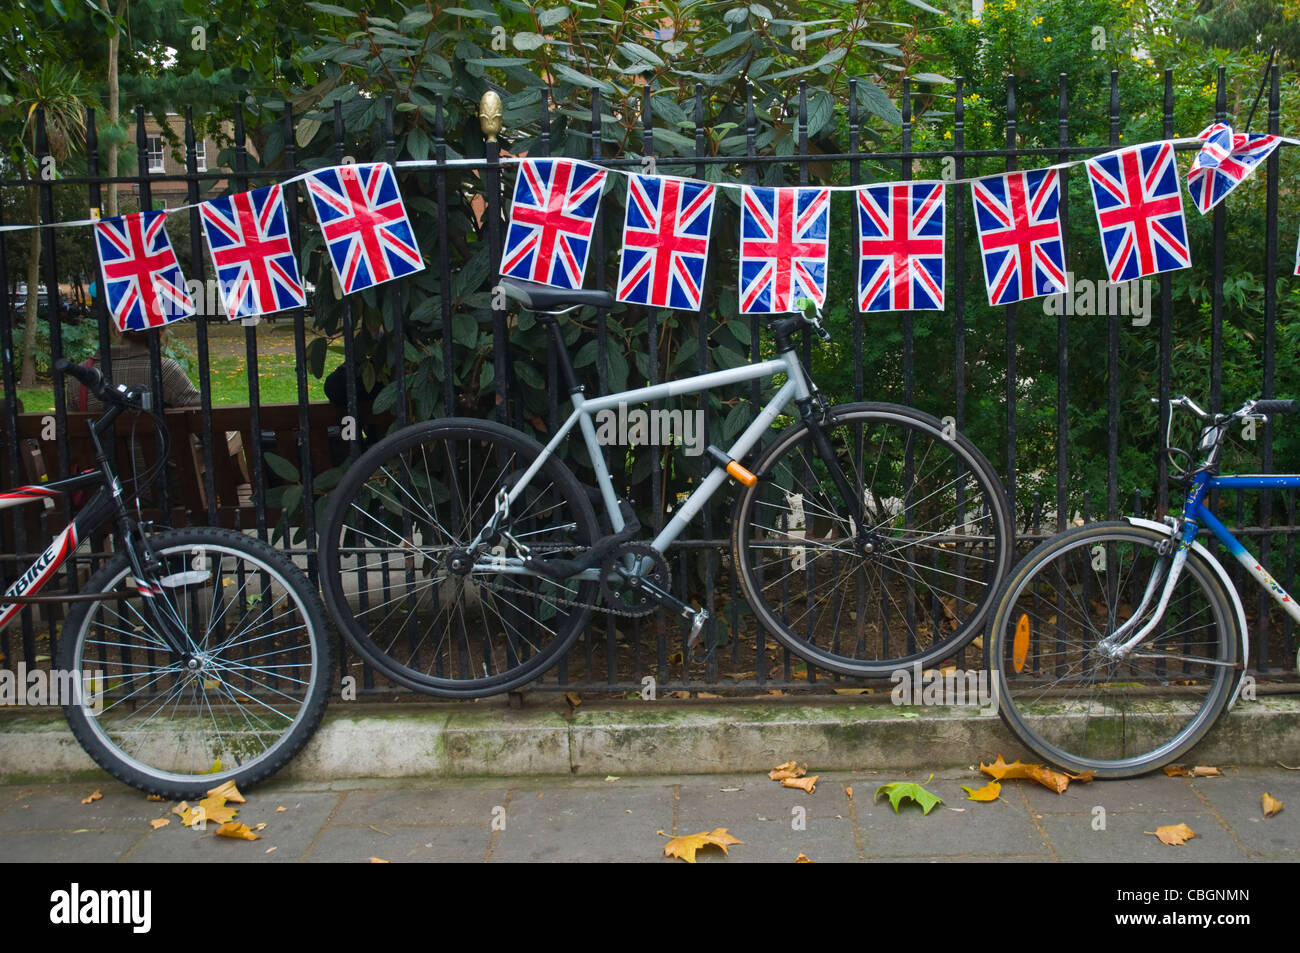 Union Jack-Flaggen und geparkte Fahrräder Soho Square London England UK Mitteleuropa Stockfoto